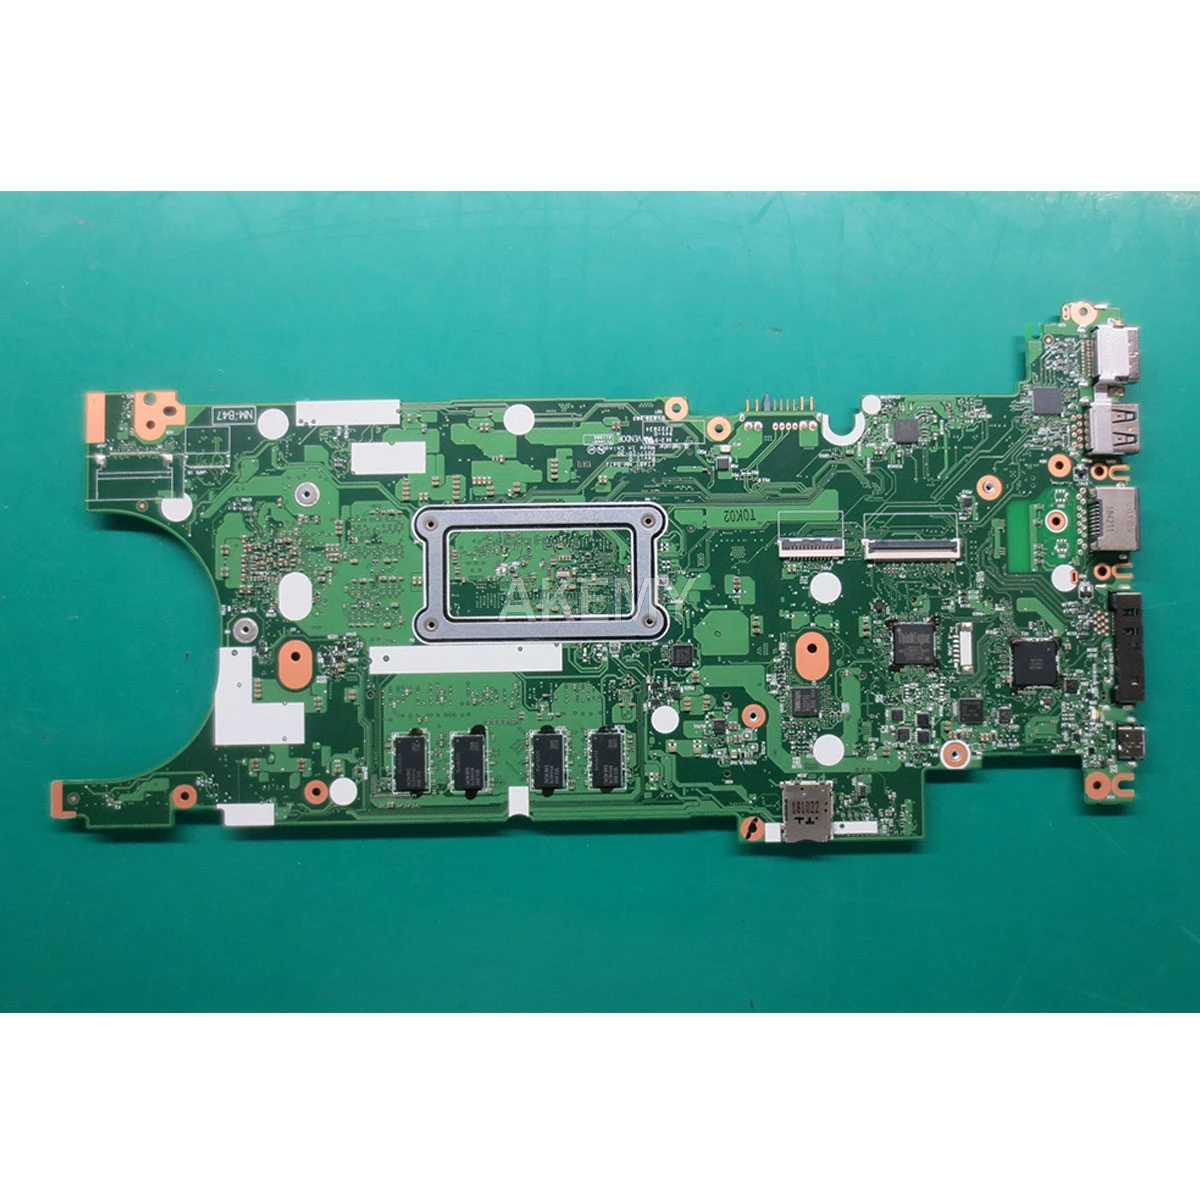 

ET481 NM-B471 MAIN BOARD For Lenovo Thinkpad T480S Laptop motherboard SR3L8 i7-8650U CPU Geforce MX150 2G GDDR5